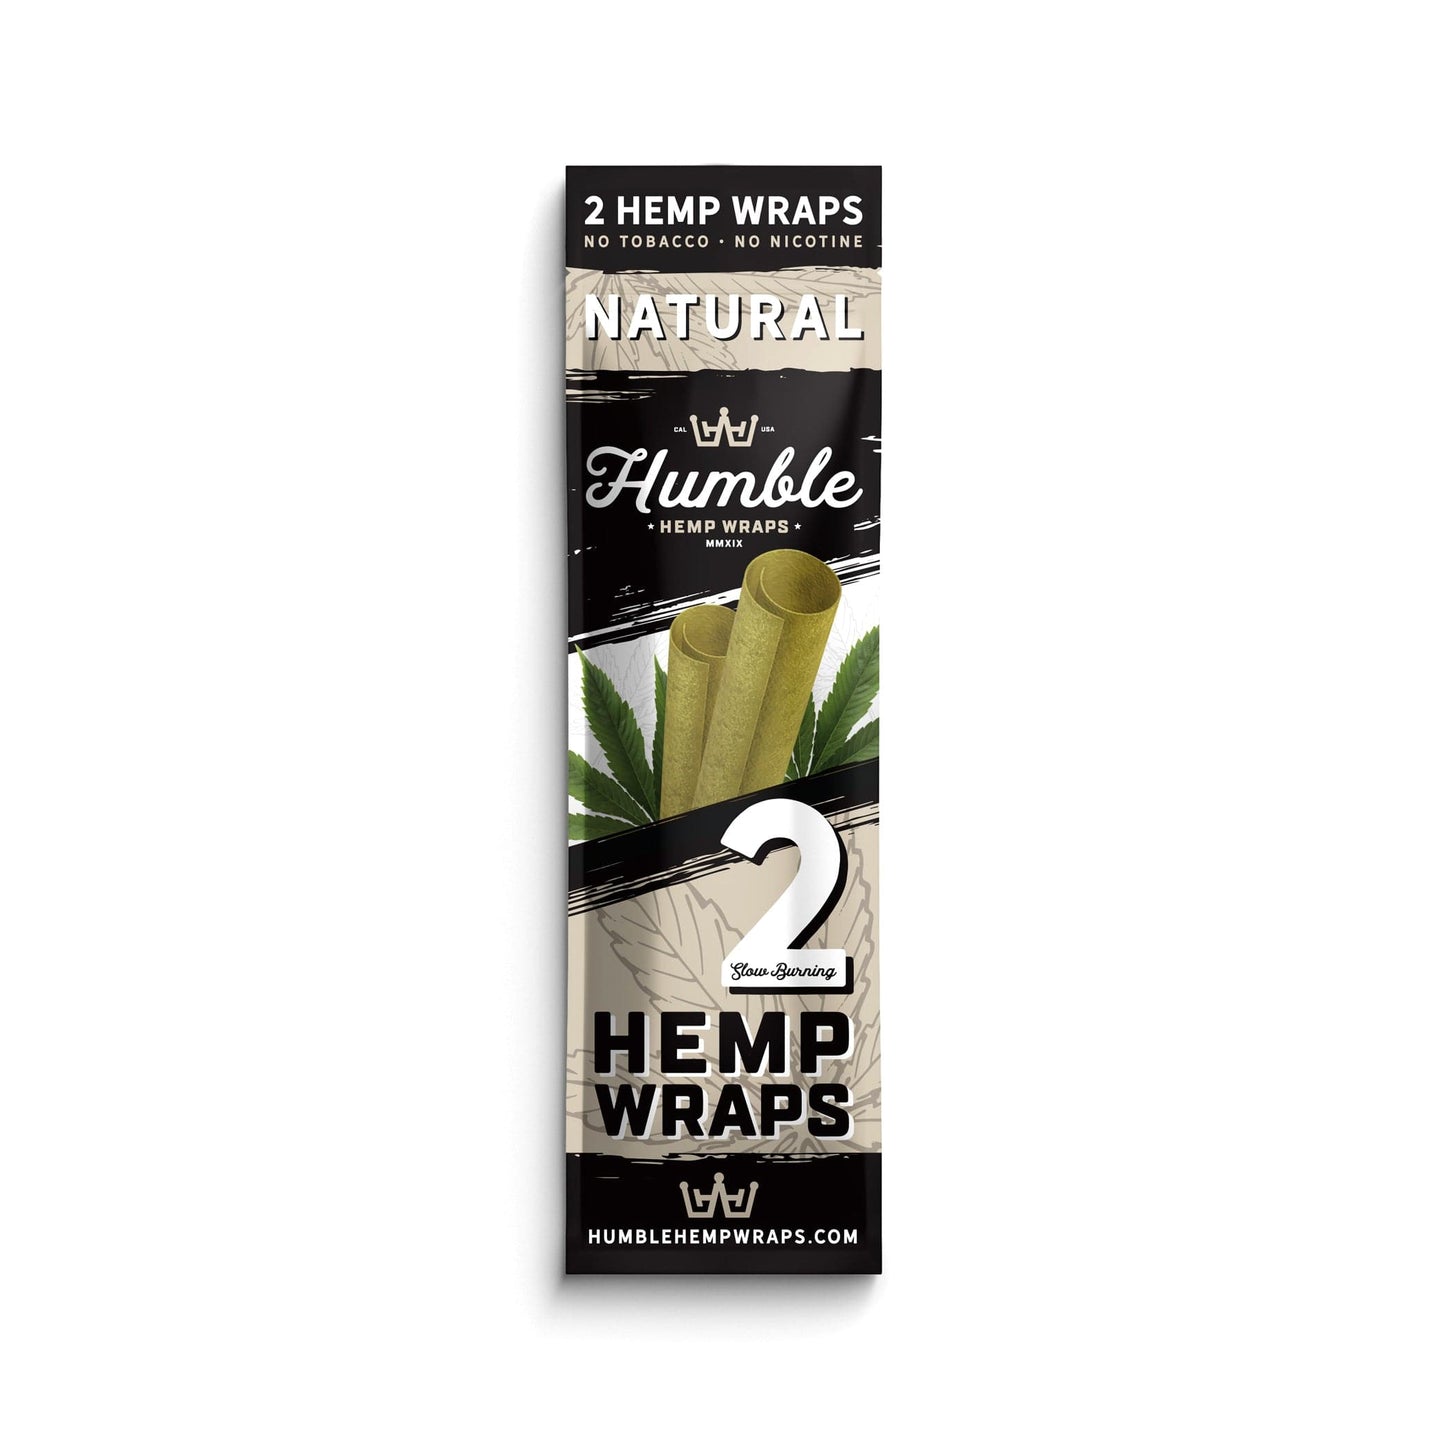 Humble Hemp Wraps - Natural - 25 Pack